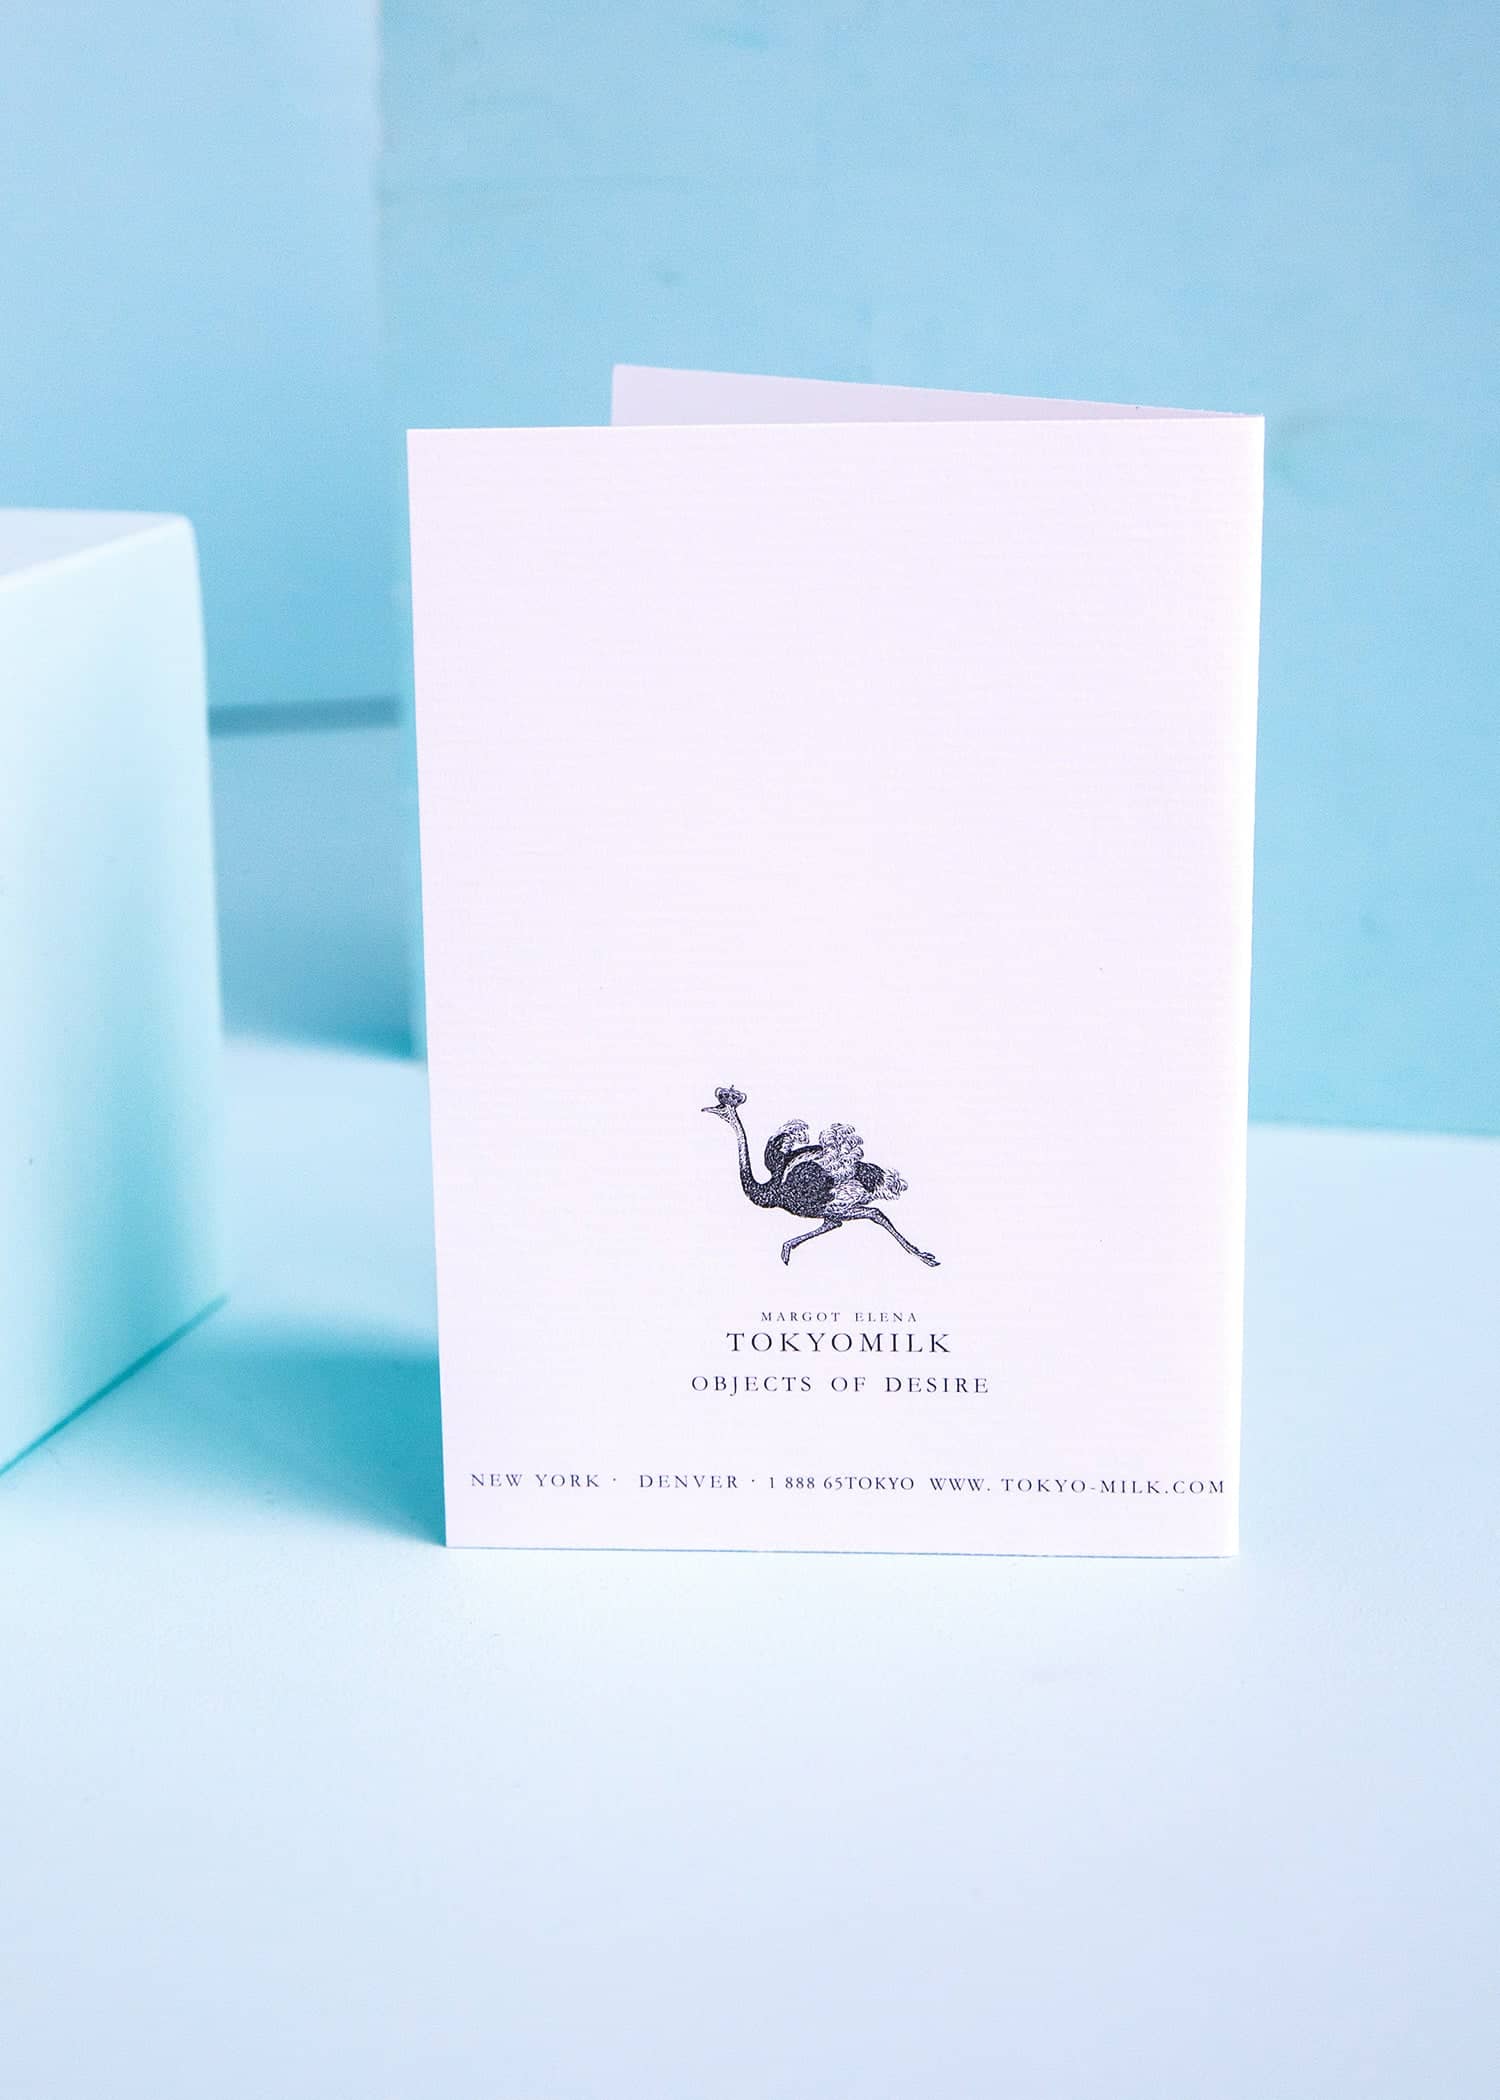 Happy Holidays Squirrel Glitter Greeting Card – 3.5" x 5"